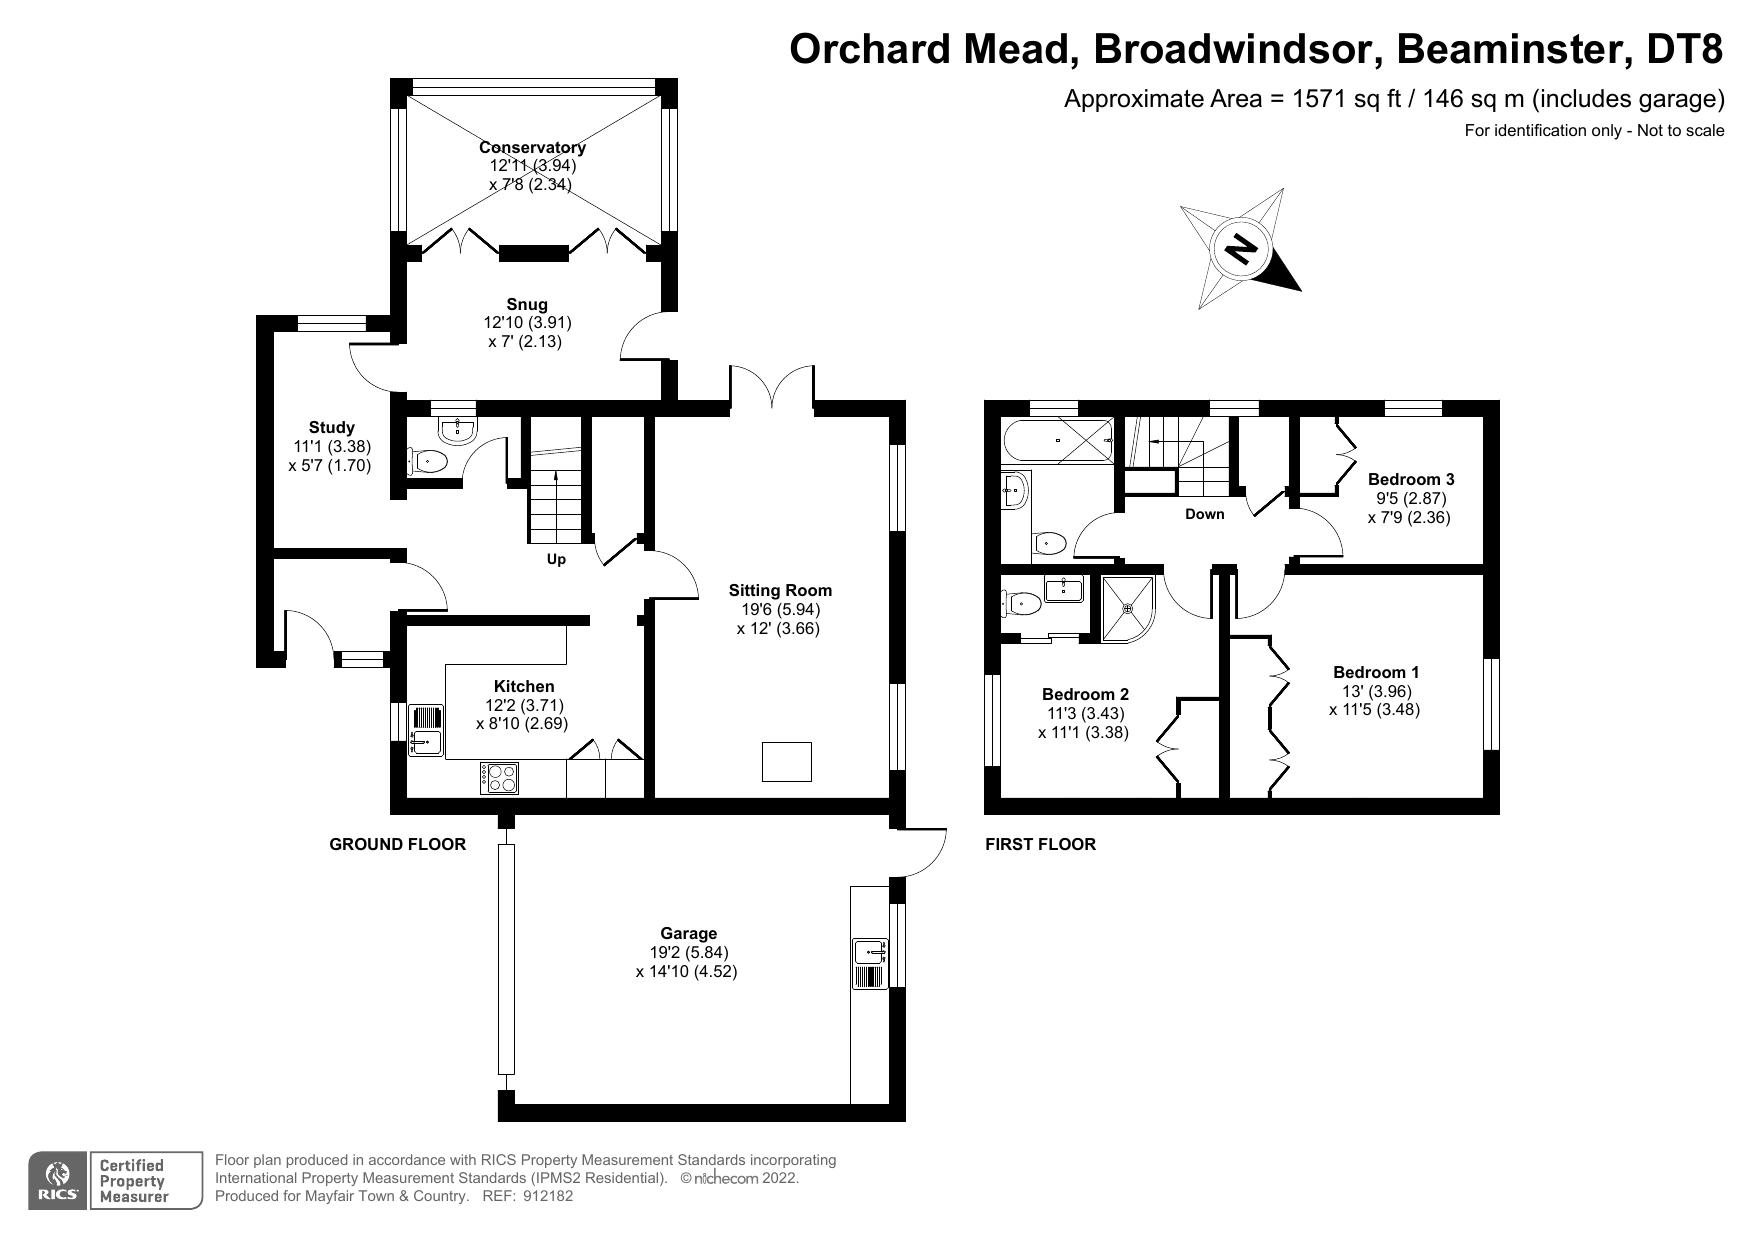 Orchard Mead Broadwindsor